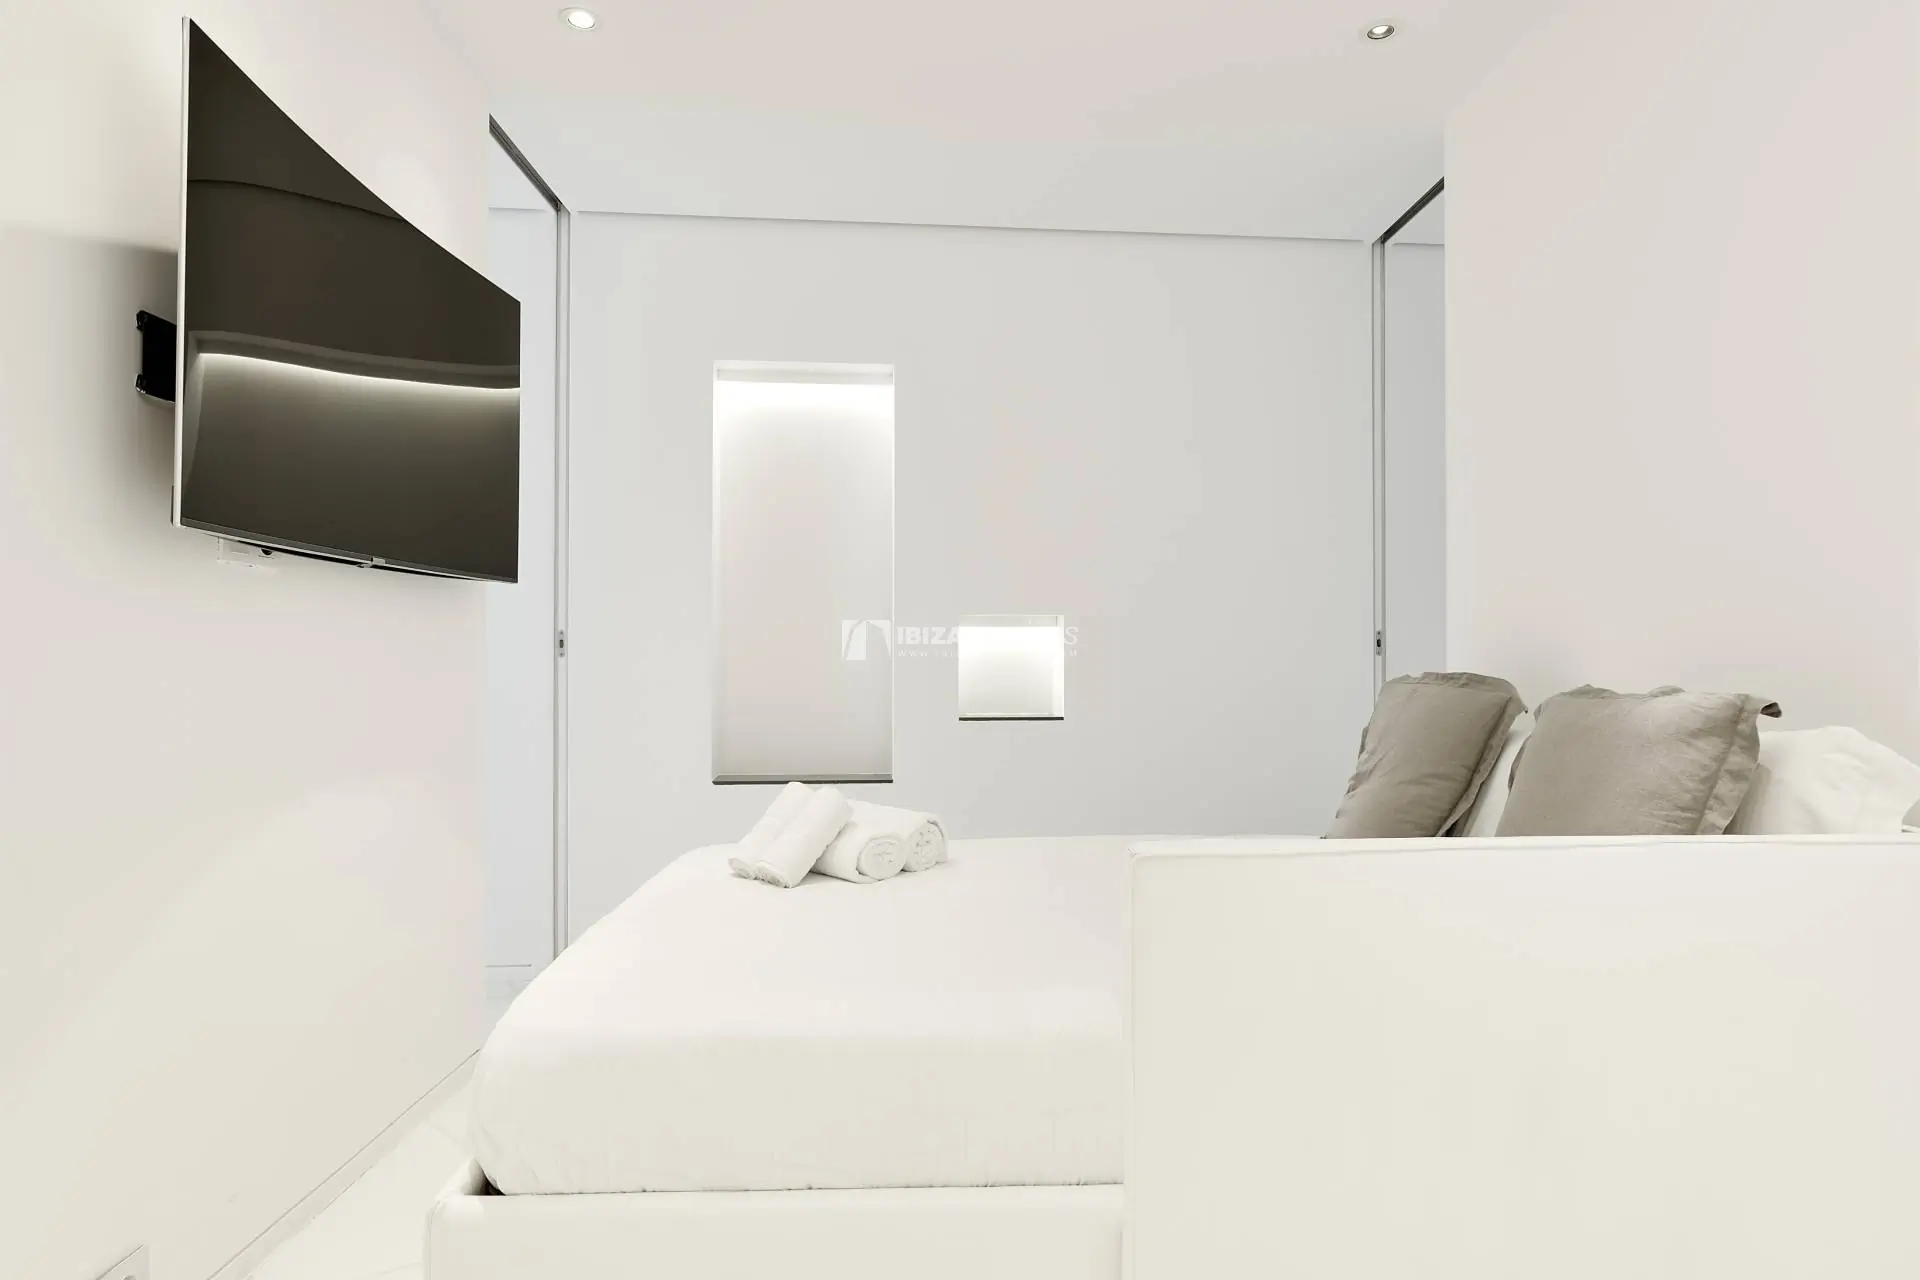 4051 Location d’un appartement de luxe de 1 chambre Las Boas de Ibiza.